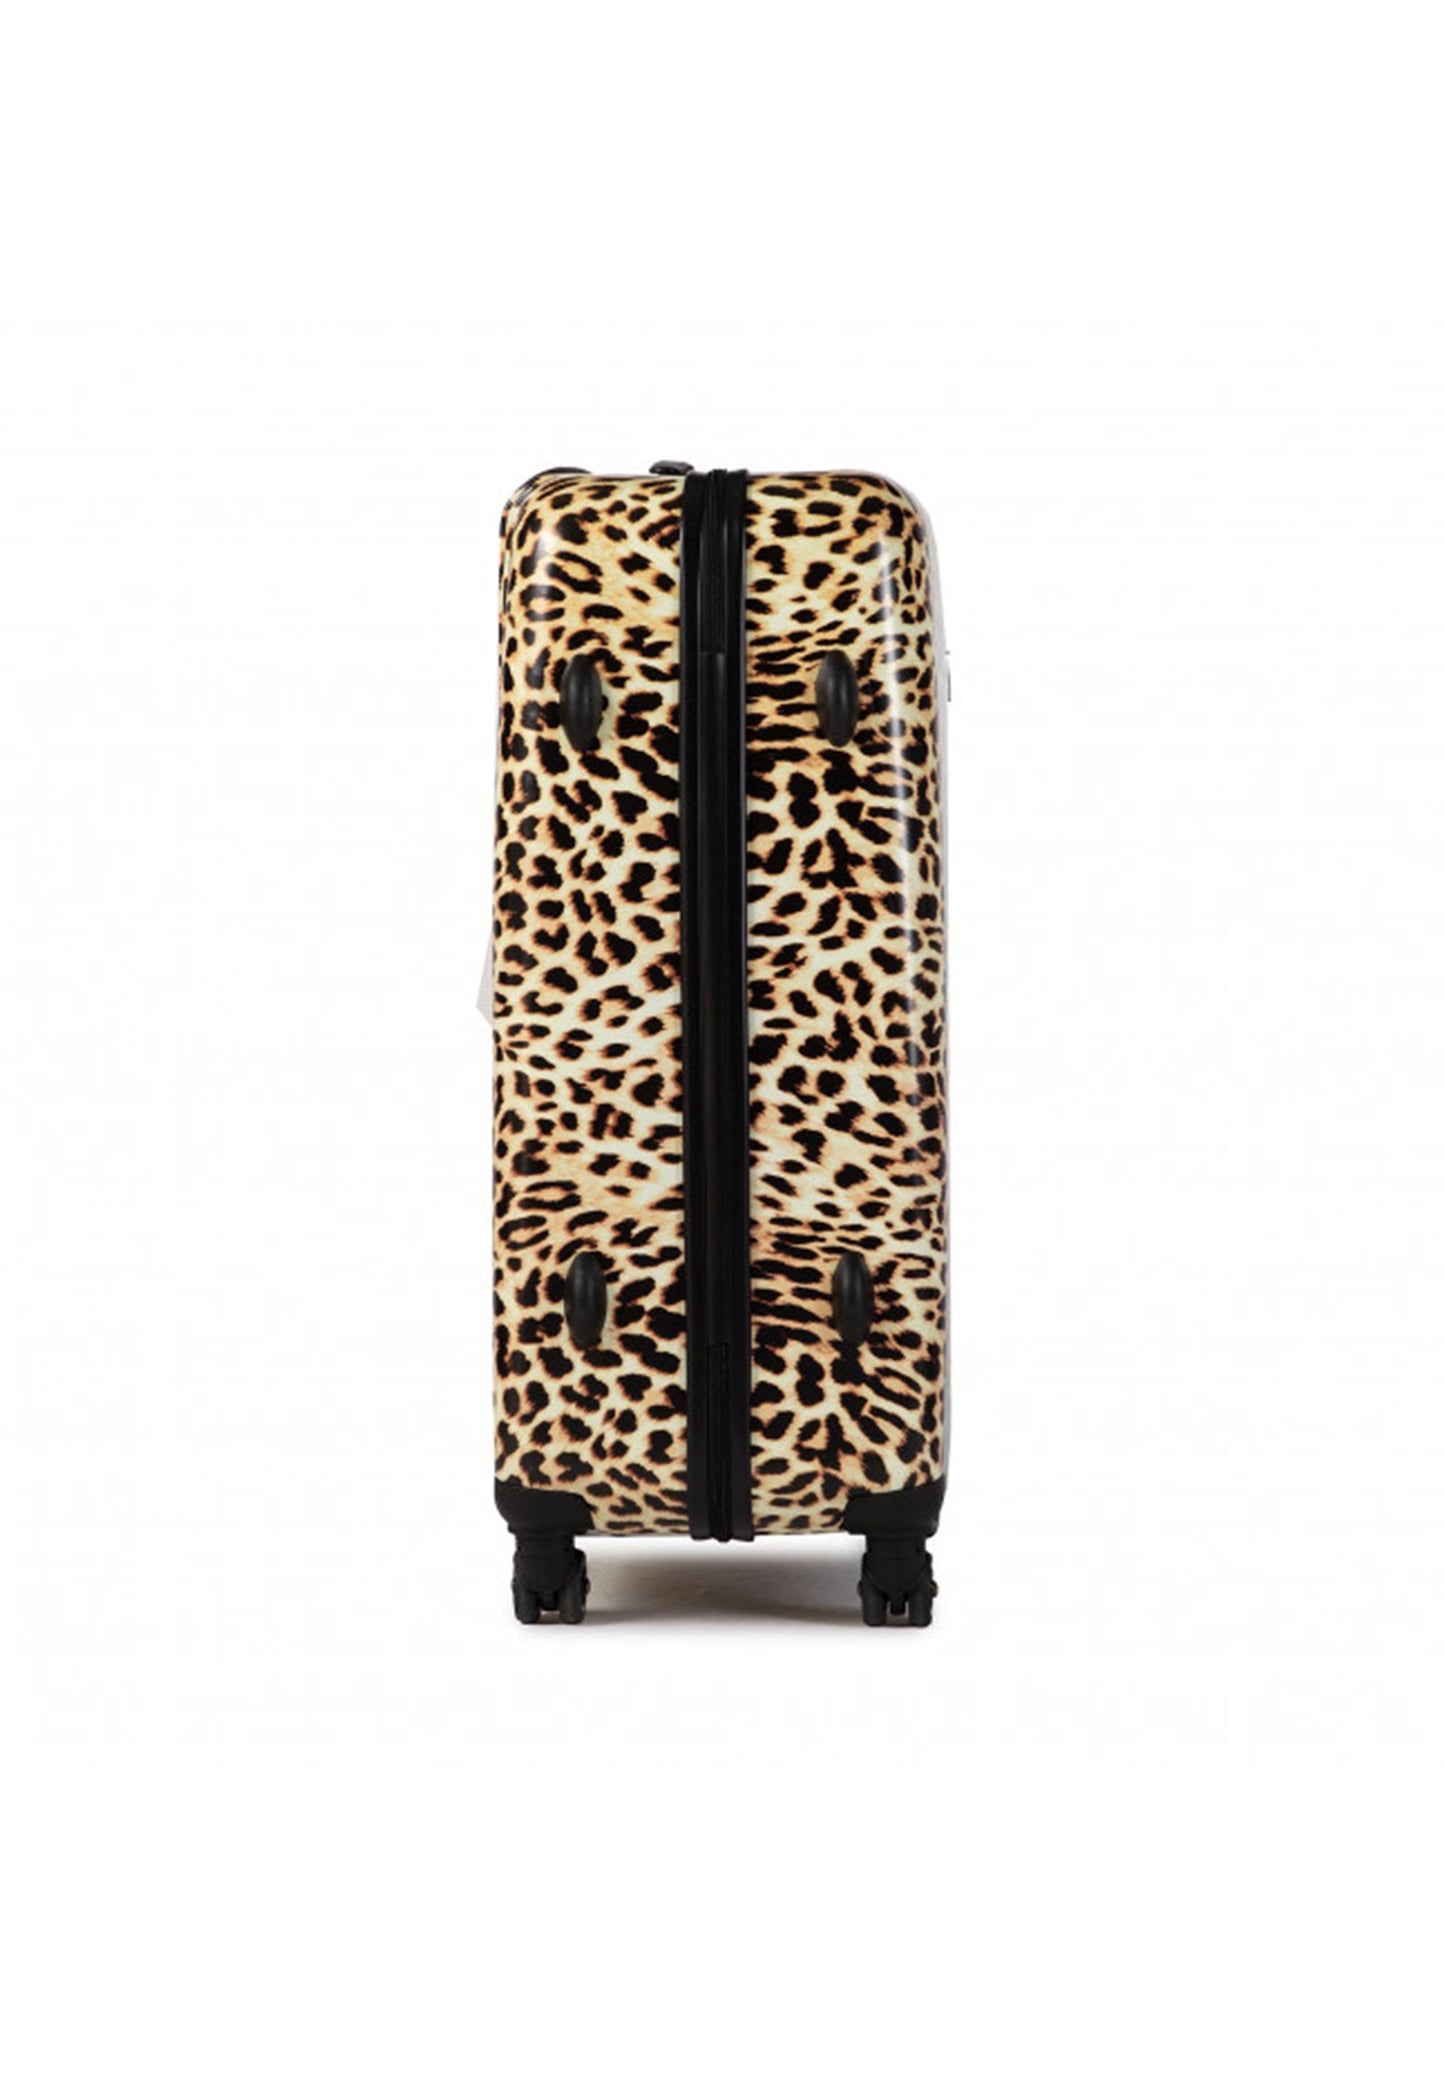 Valise rigide / trolley / valise de voyage Saxoline - 78 cm (grande) - imprimé léopard